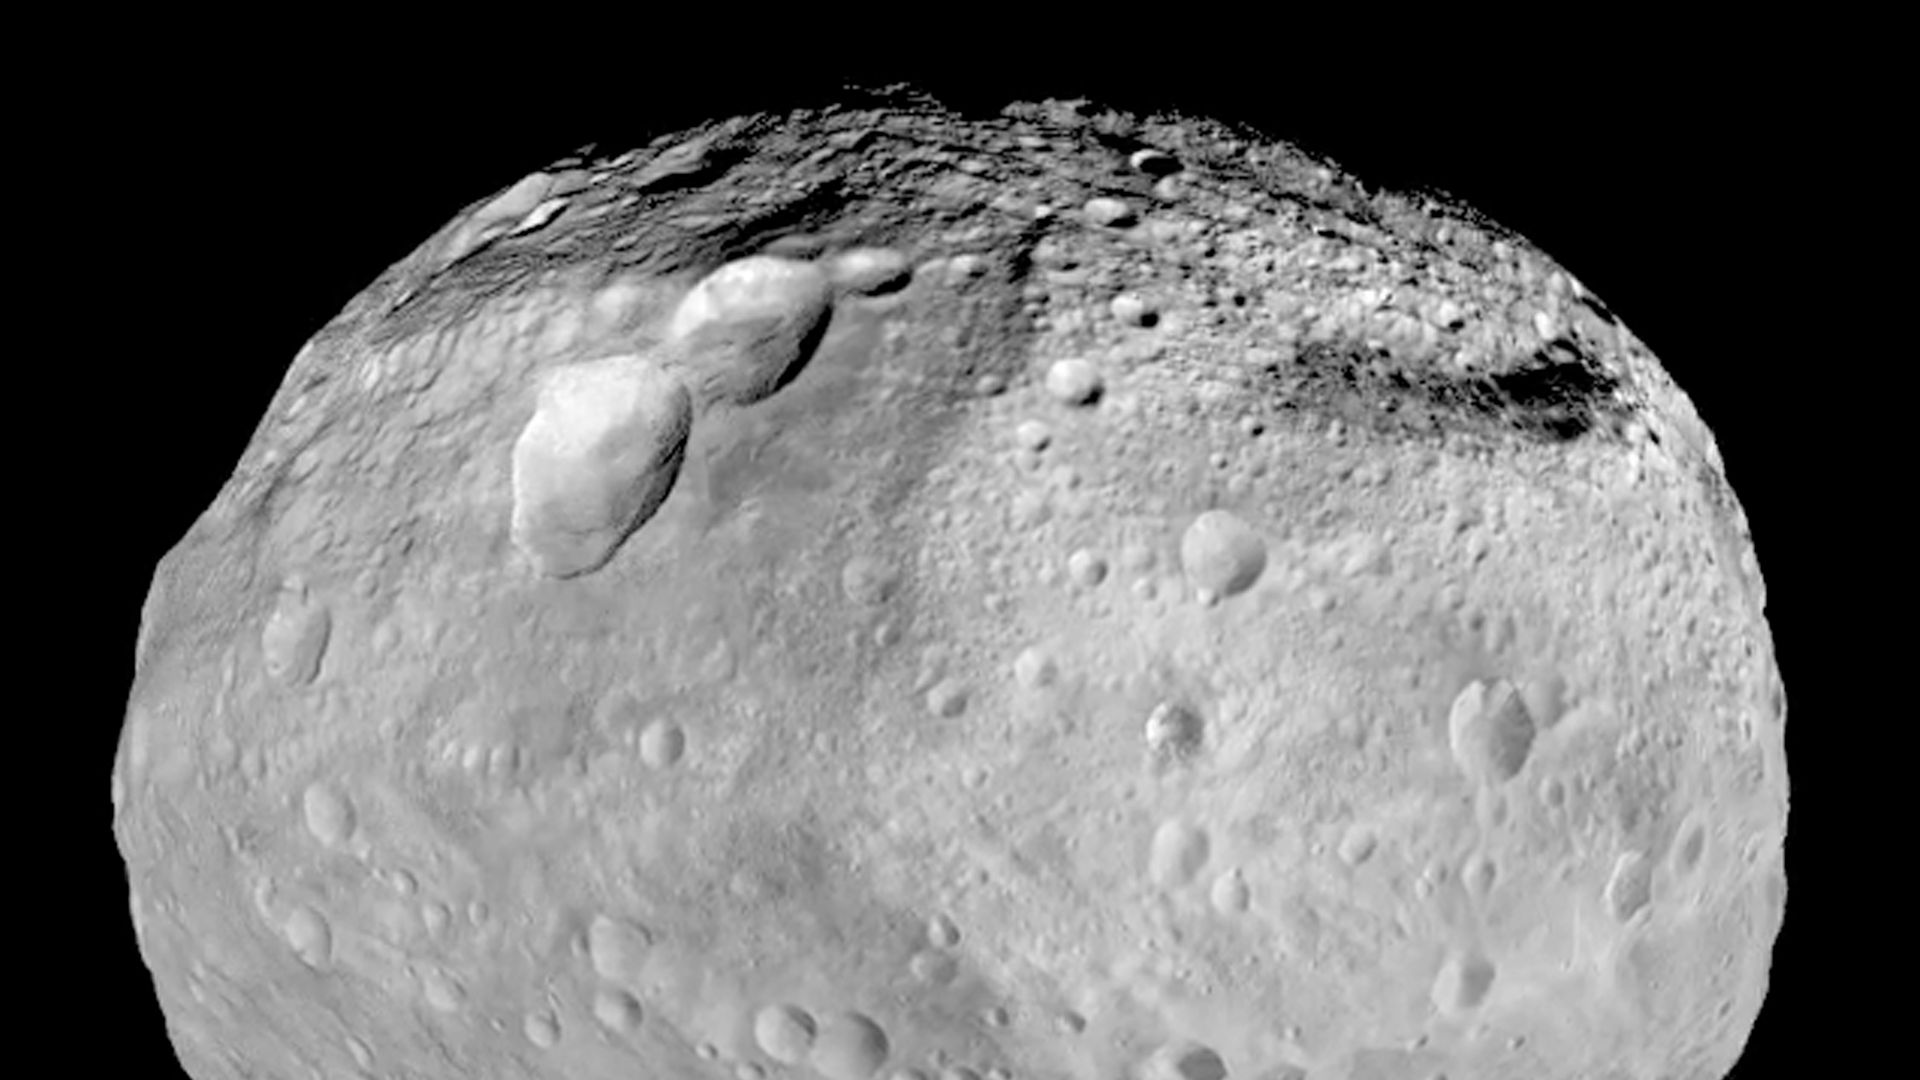 giant asteroid Vesta